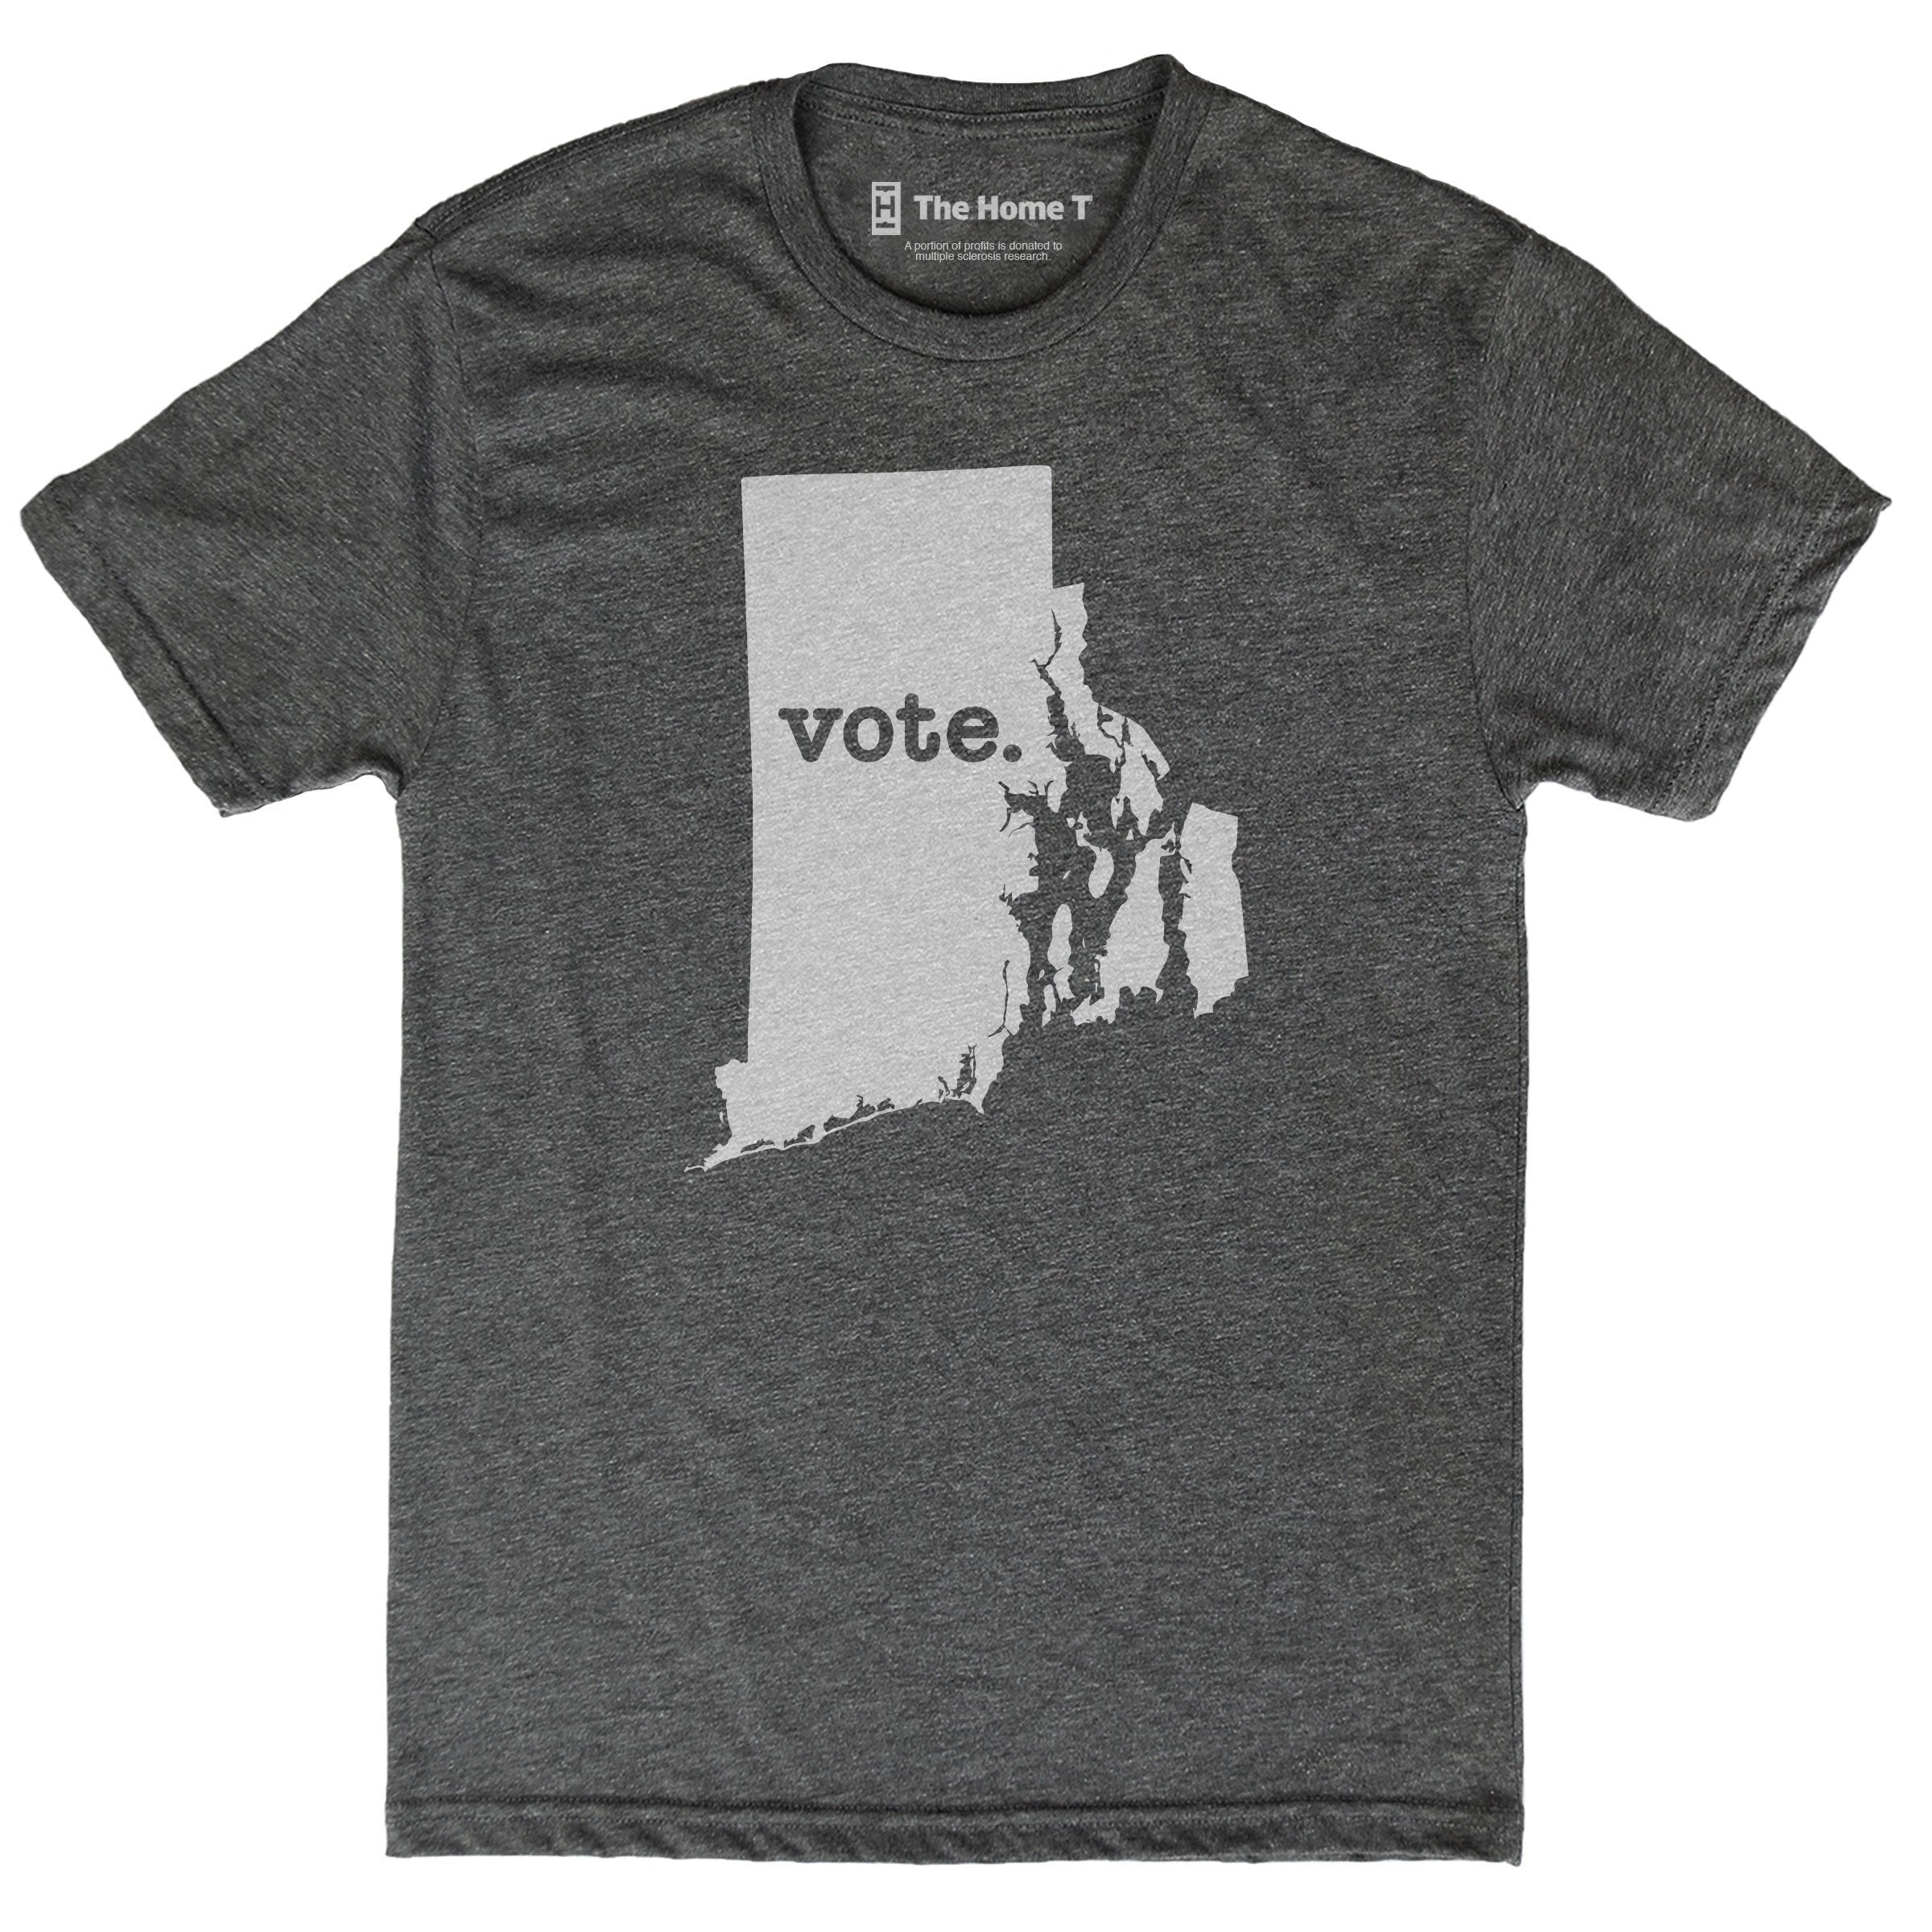 Rhode Island Vote Home T Vote The Home T XS Grey